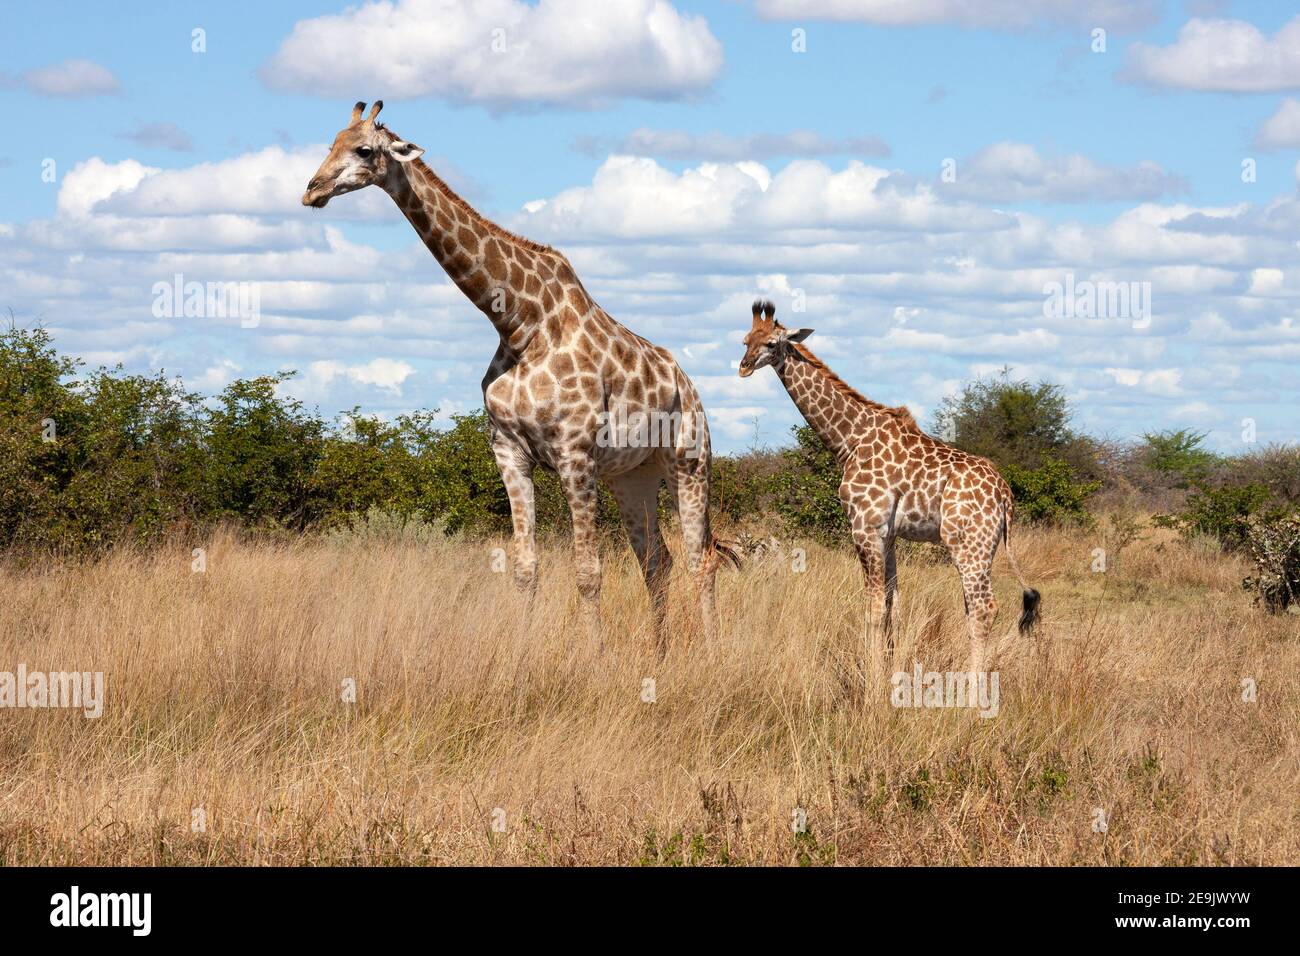 Giraffe (Giraffa camelopardalis) in the Savuti region of northern Botswana, Africa. The giraffe is an African artiodactyl mammal, the tallest living t Stock Photo